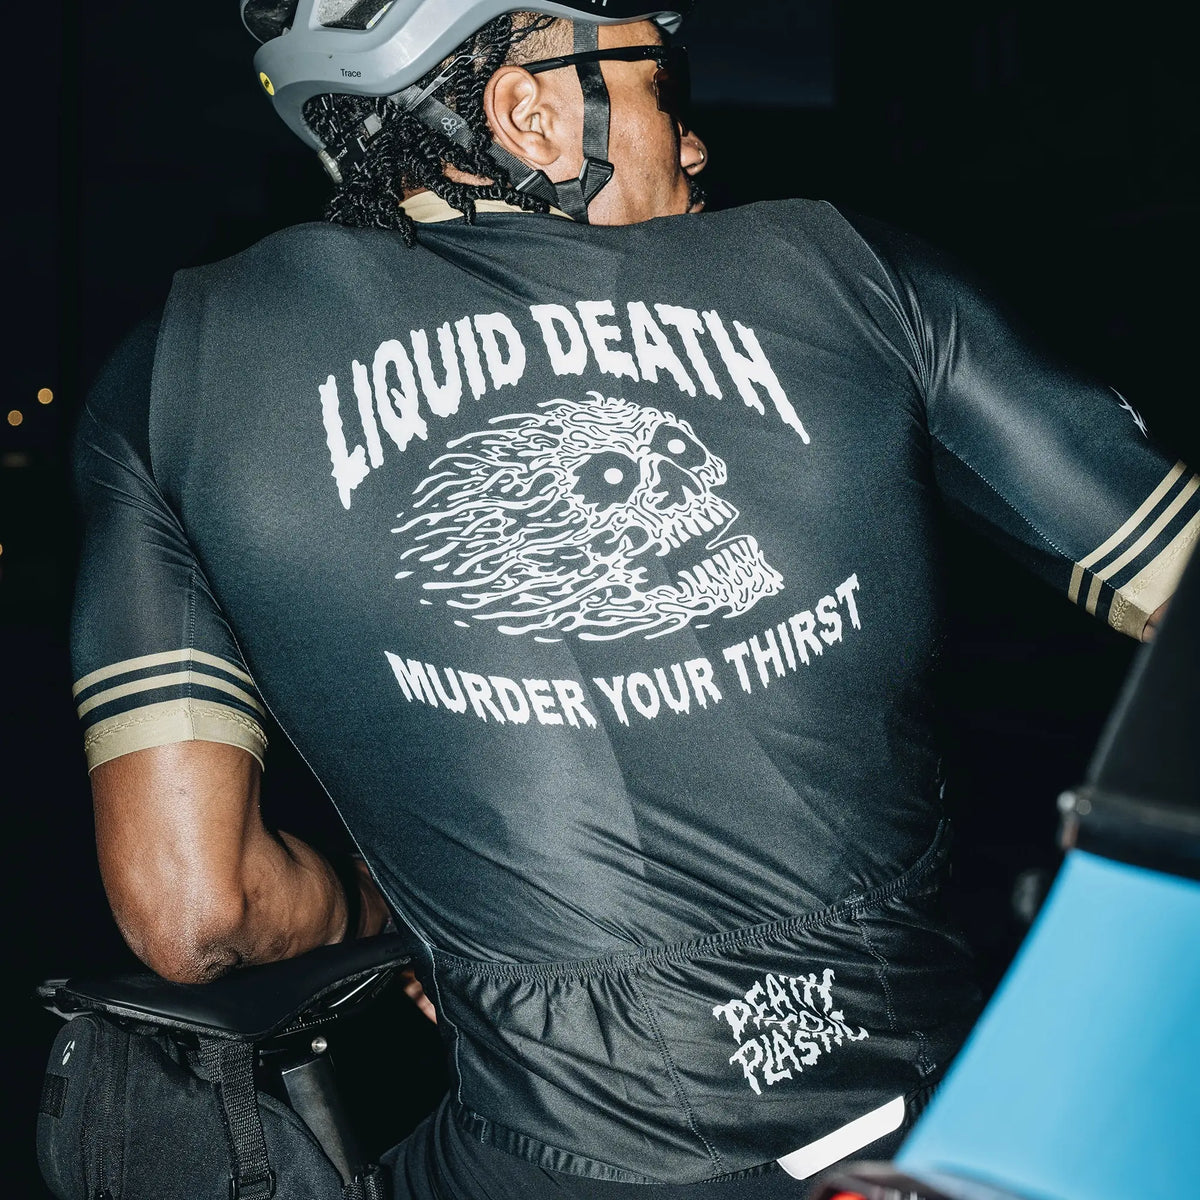 Vented Mountain Bike Jersey - Short Sleeve Teal MTB Jersey - Men's